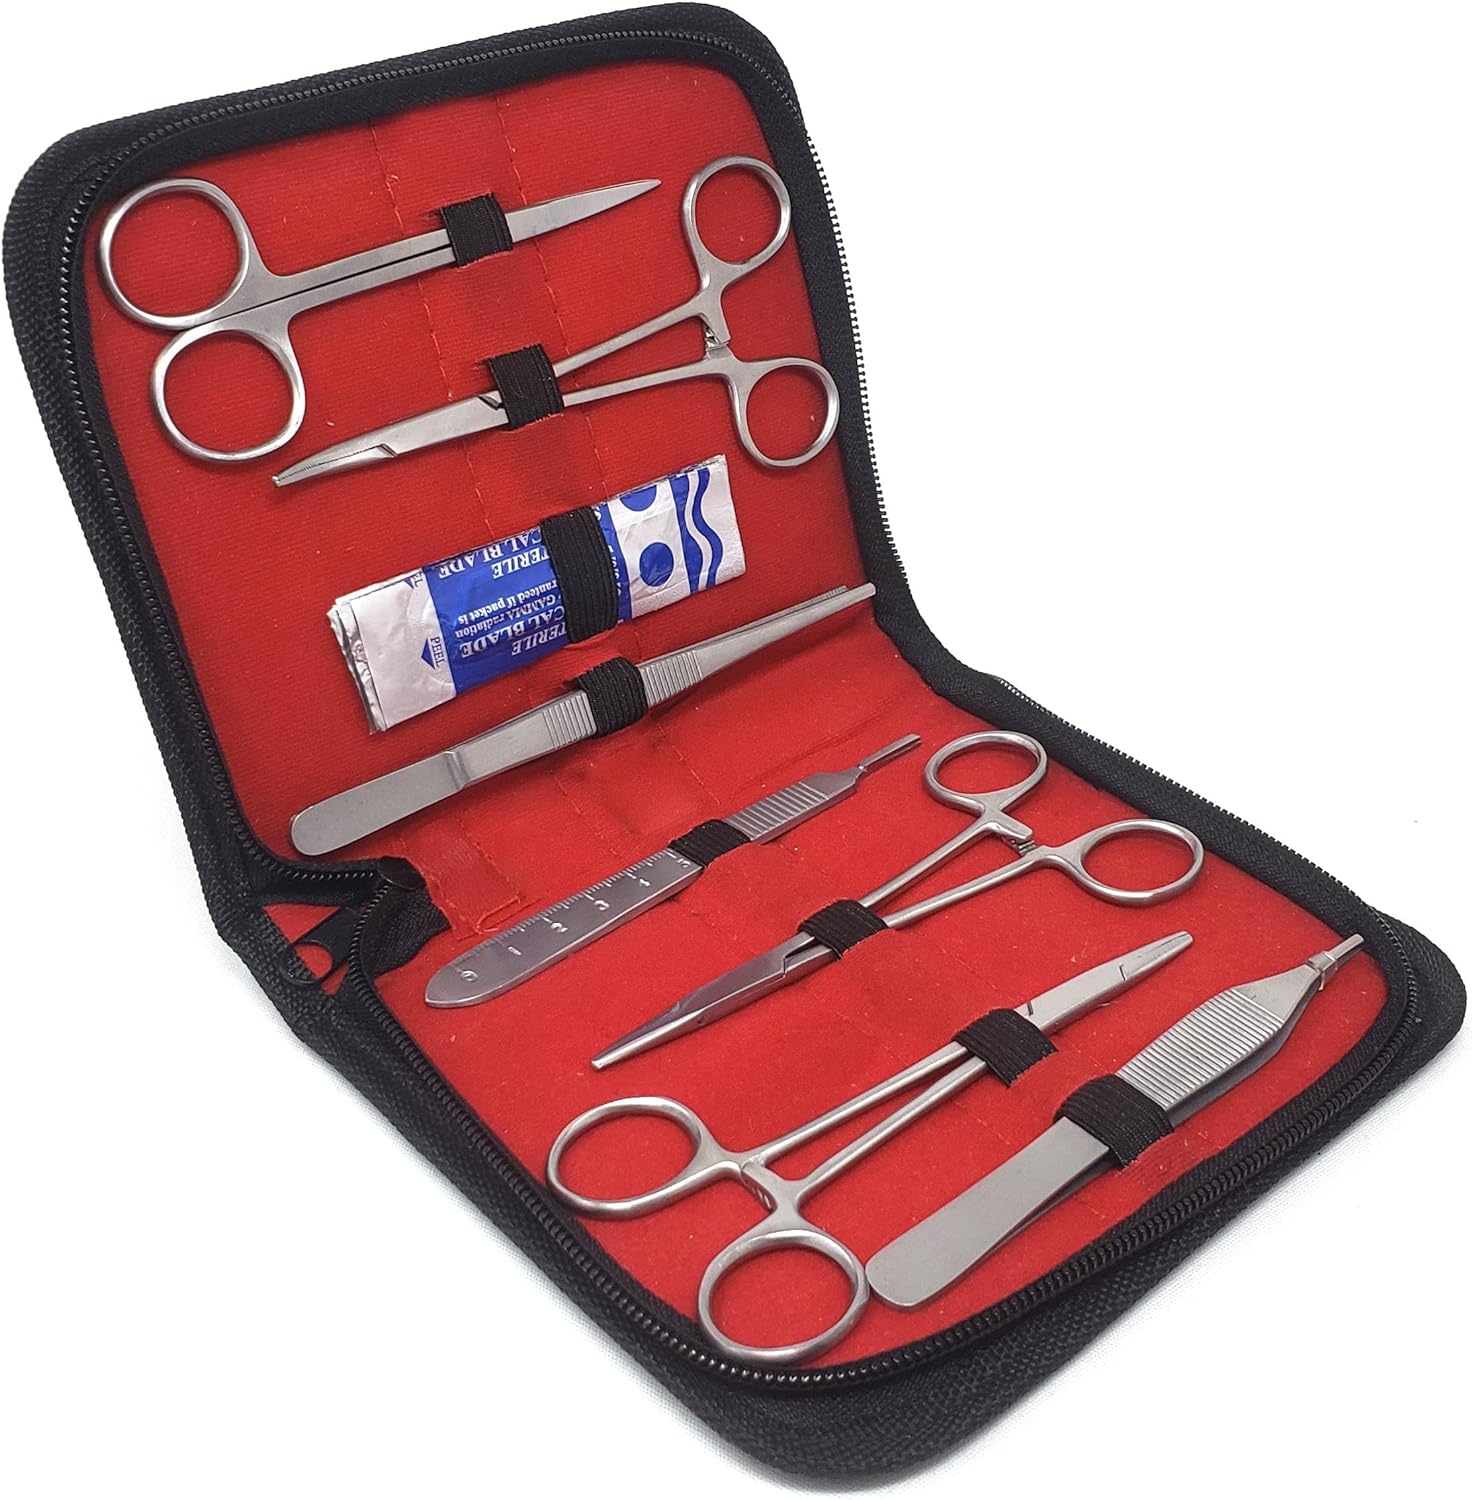 A2Z High Quality 30 Pieces Scissors Forceps Hemostats Needle Holders Suture Student Training Set kit nrog Case